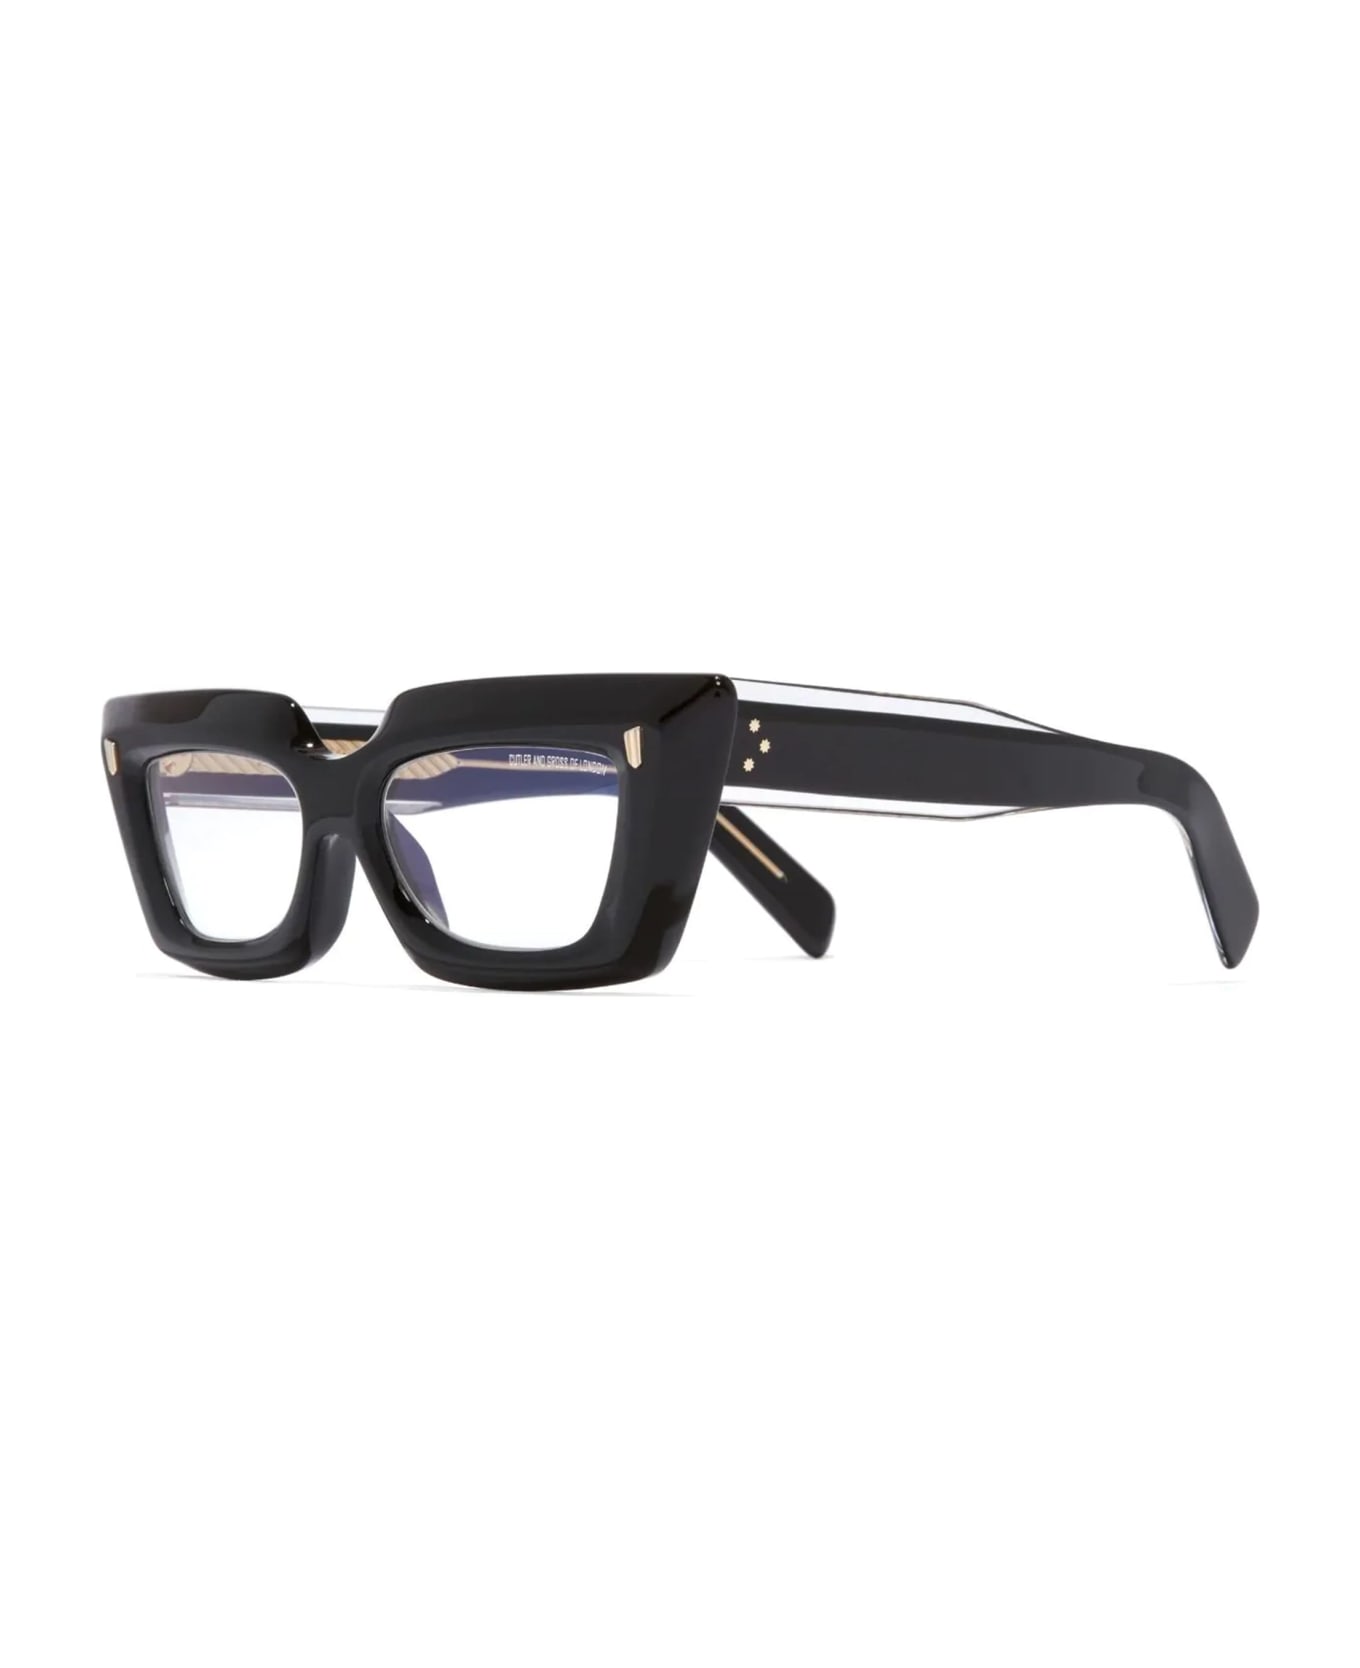 Cutler and Gross 1408 / Black Rx Glasses - Black アイウェア